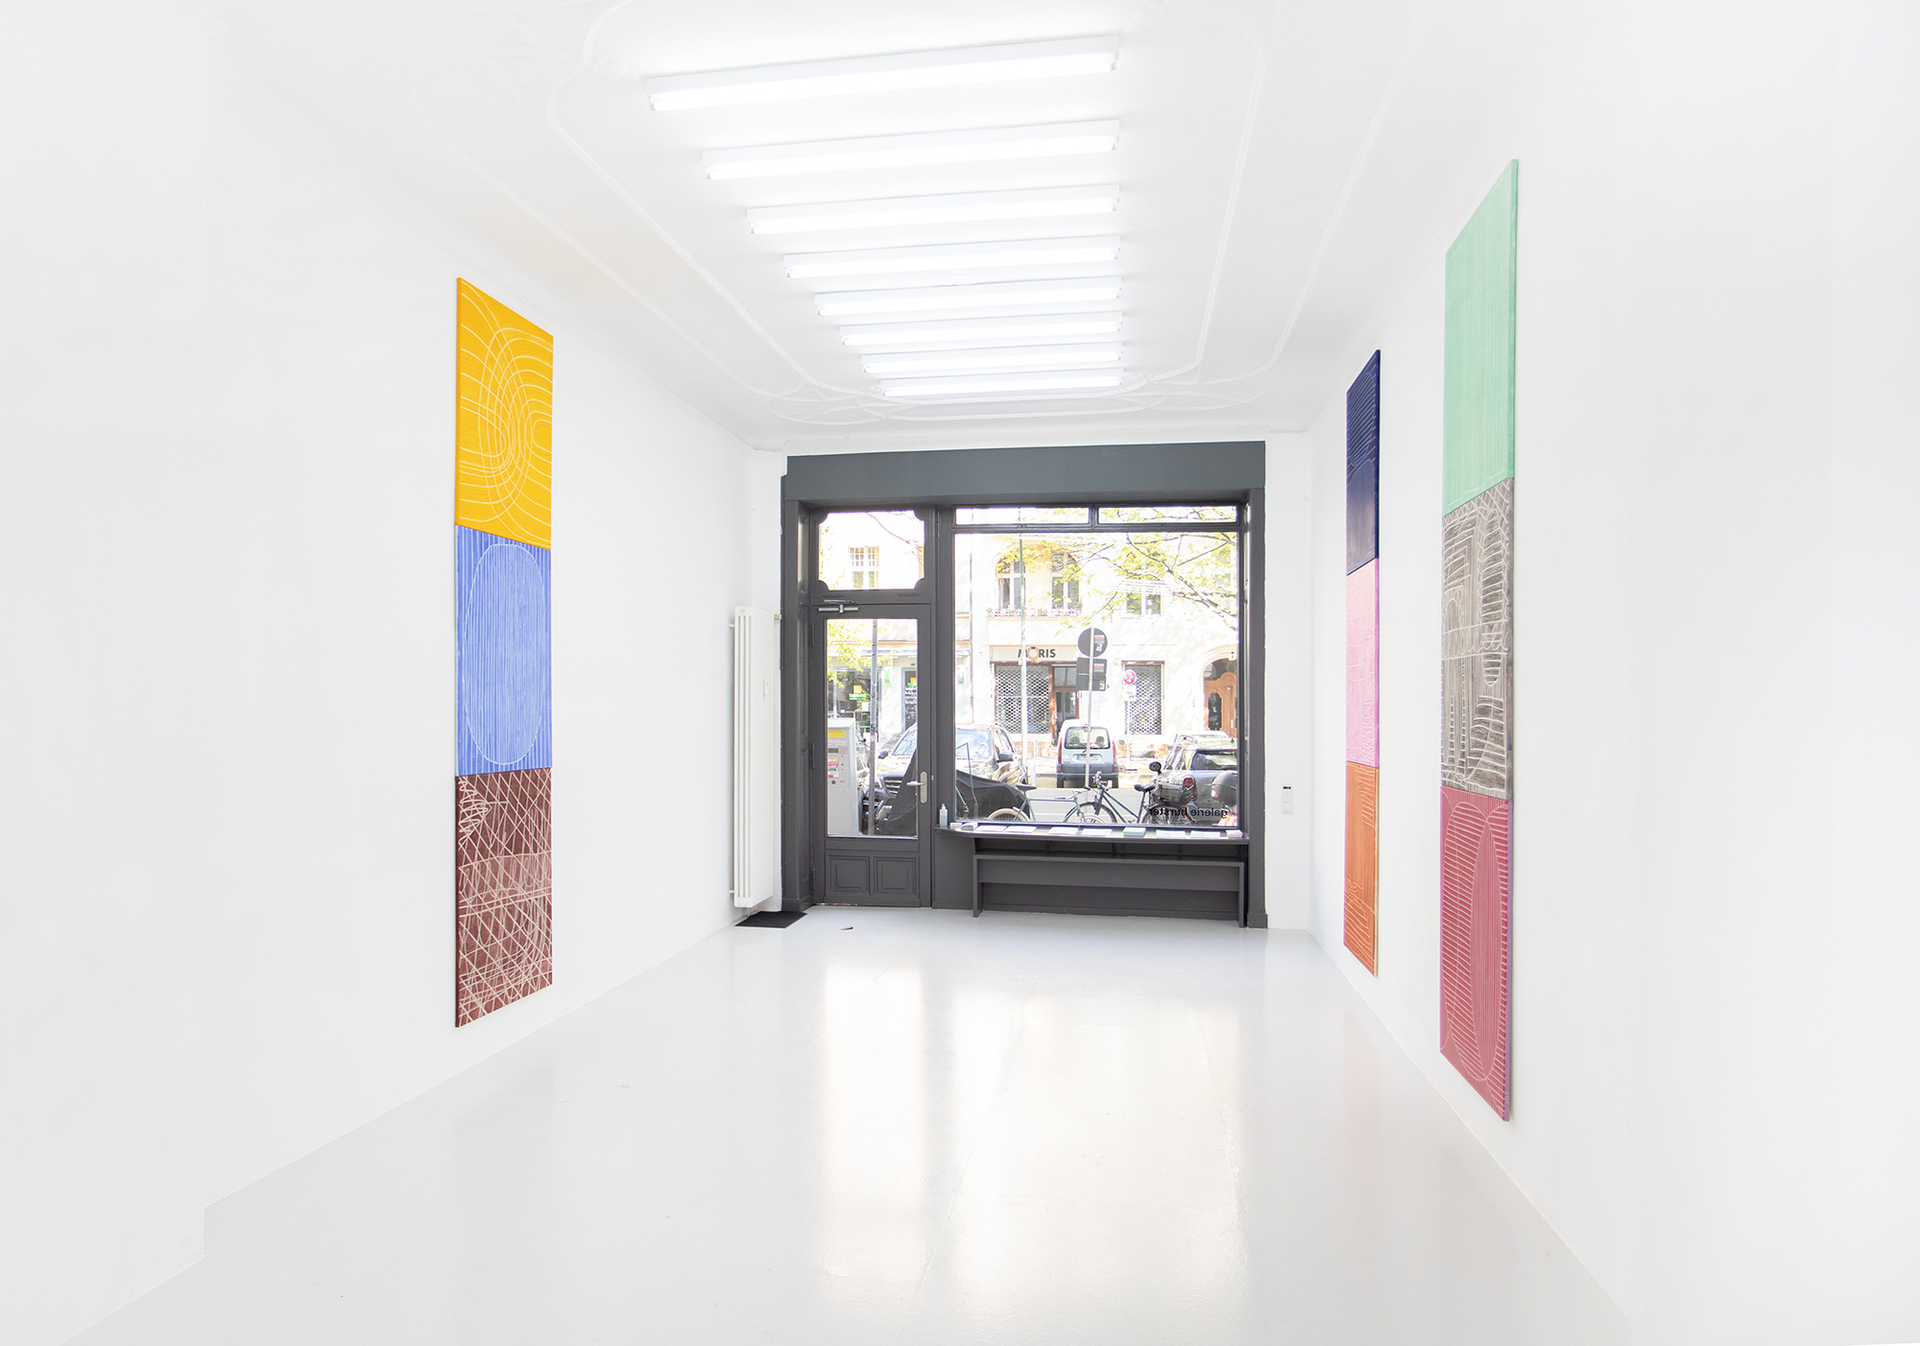 Installation view at galerie burster Berlin, 2022